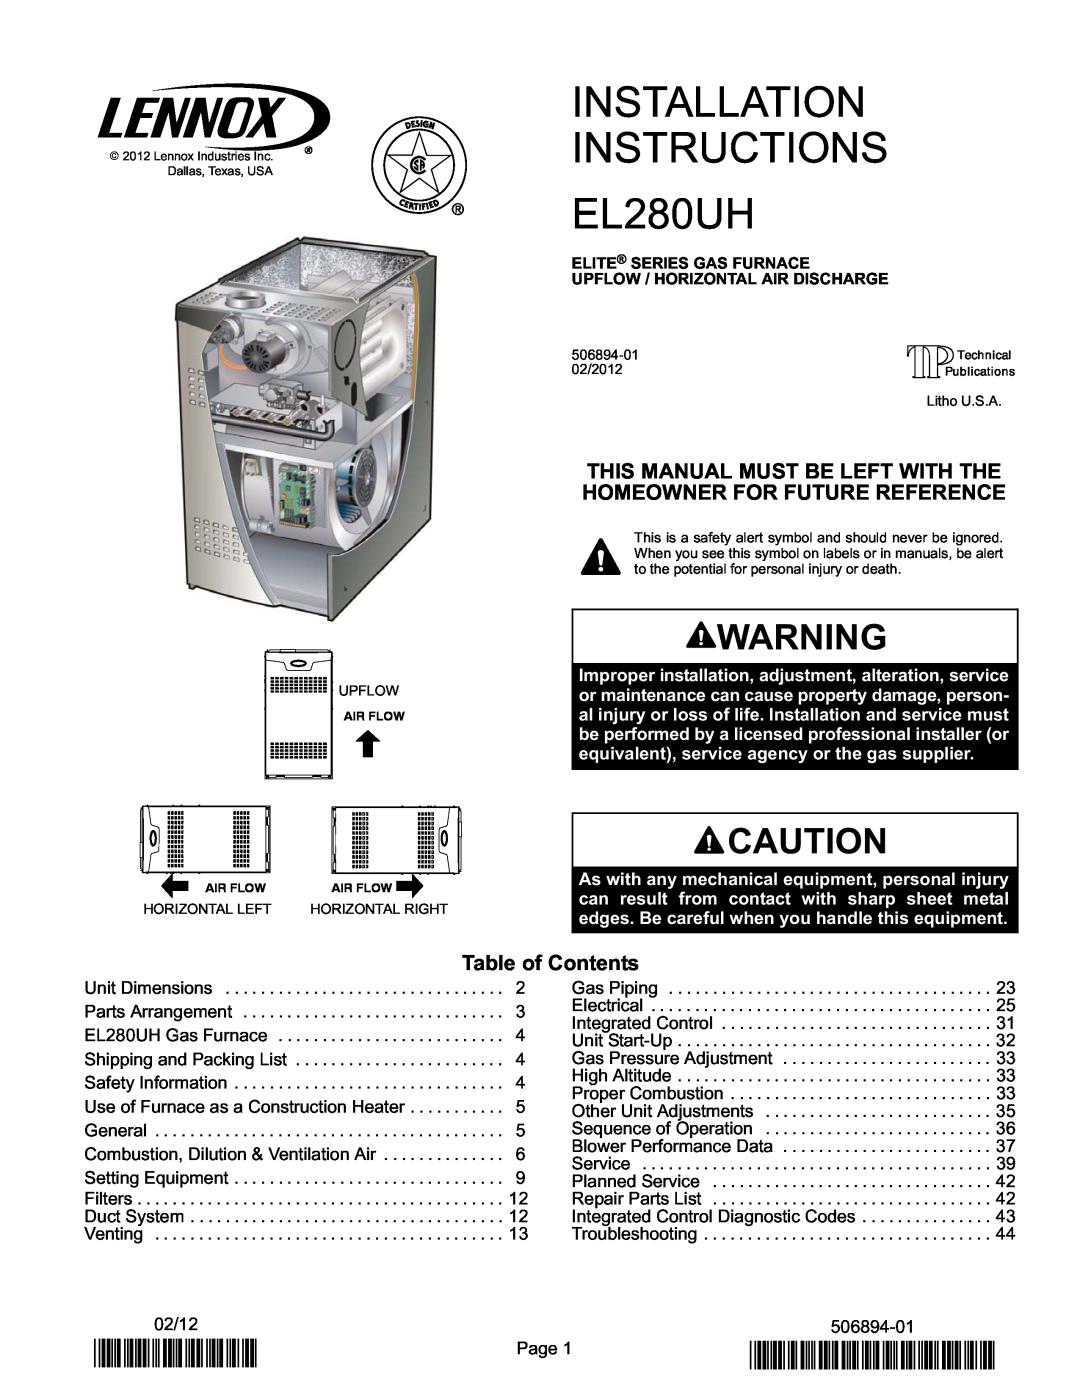 Lennox International Inc Elite Series Gas Furnace Upflow/Horizontal Air Discharge installation instructions 2P0212 